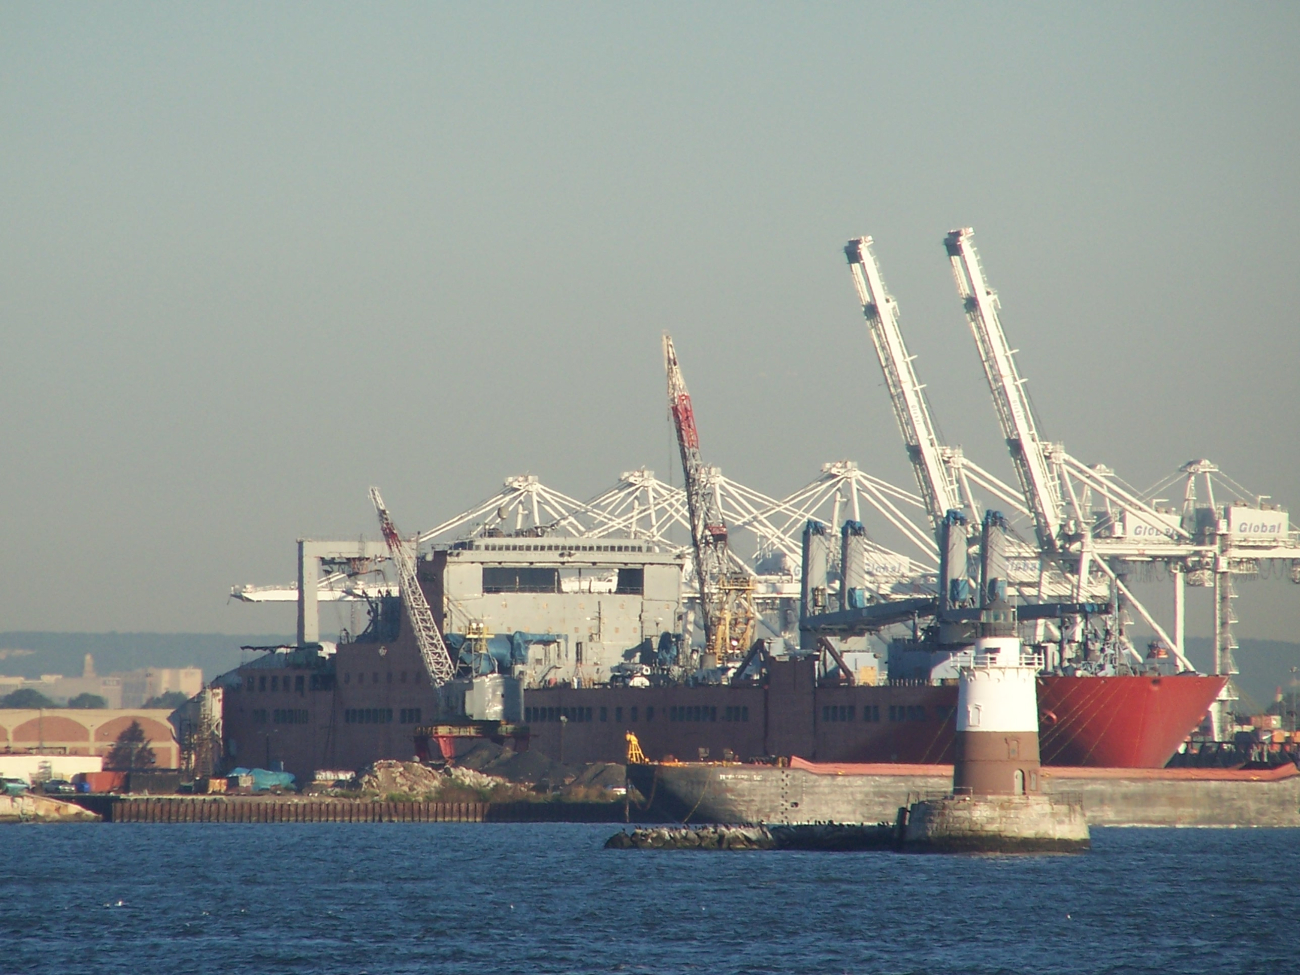 Large cargo ship at dock